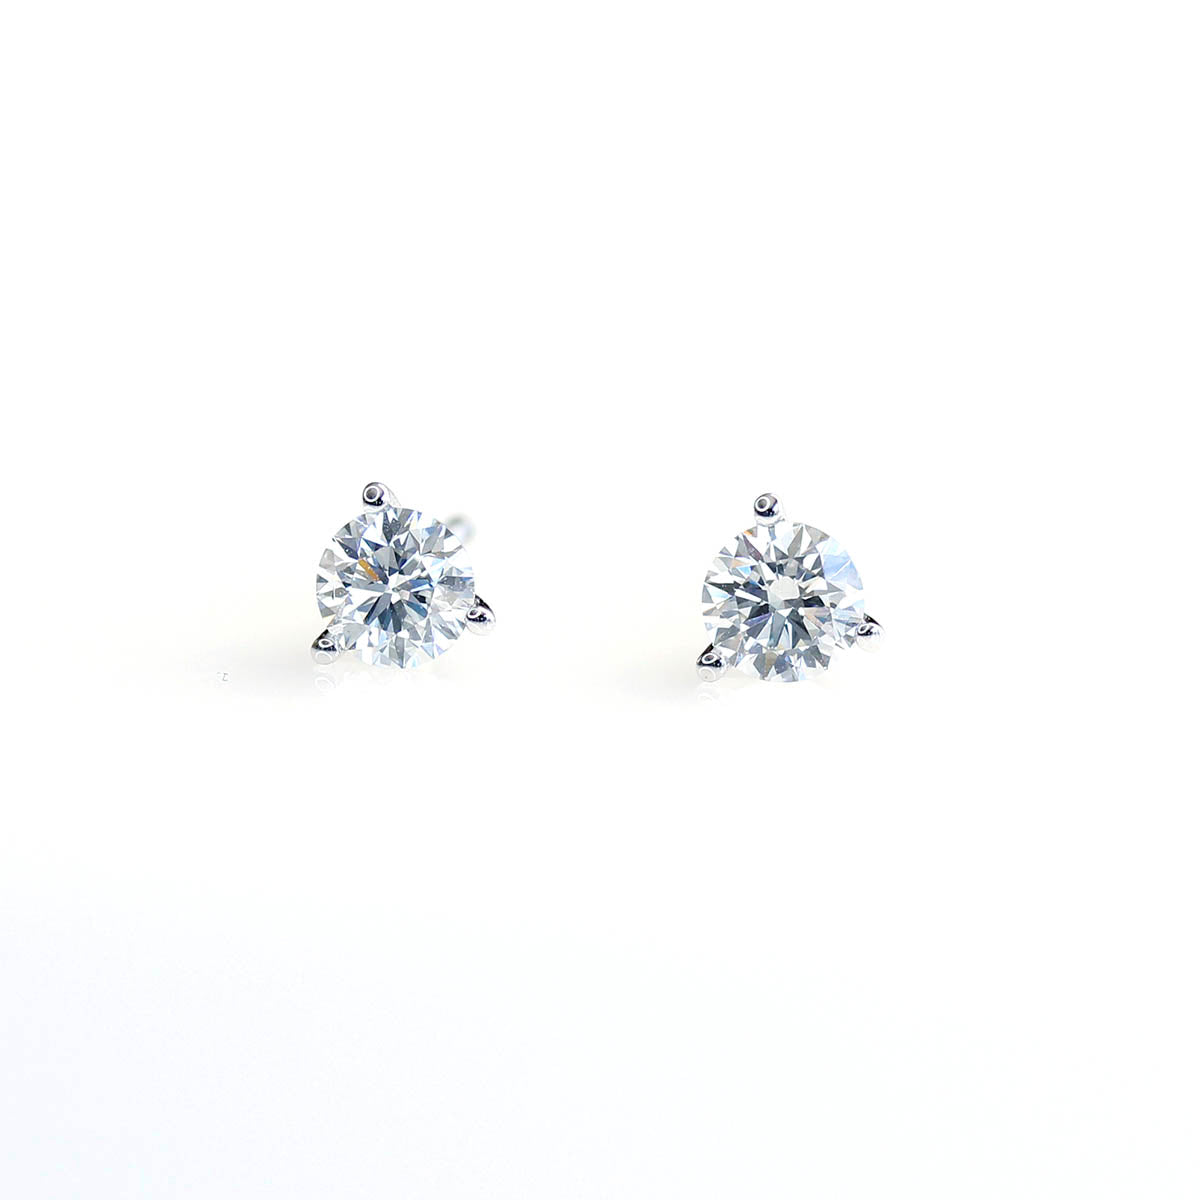 Lab-Grown Diamond Stud Earrings 1.20 carats total weight #STUDS-LG-1.20-1